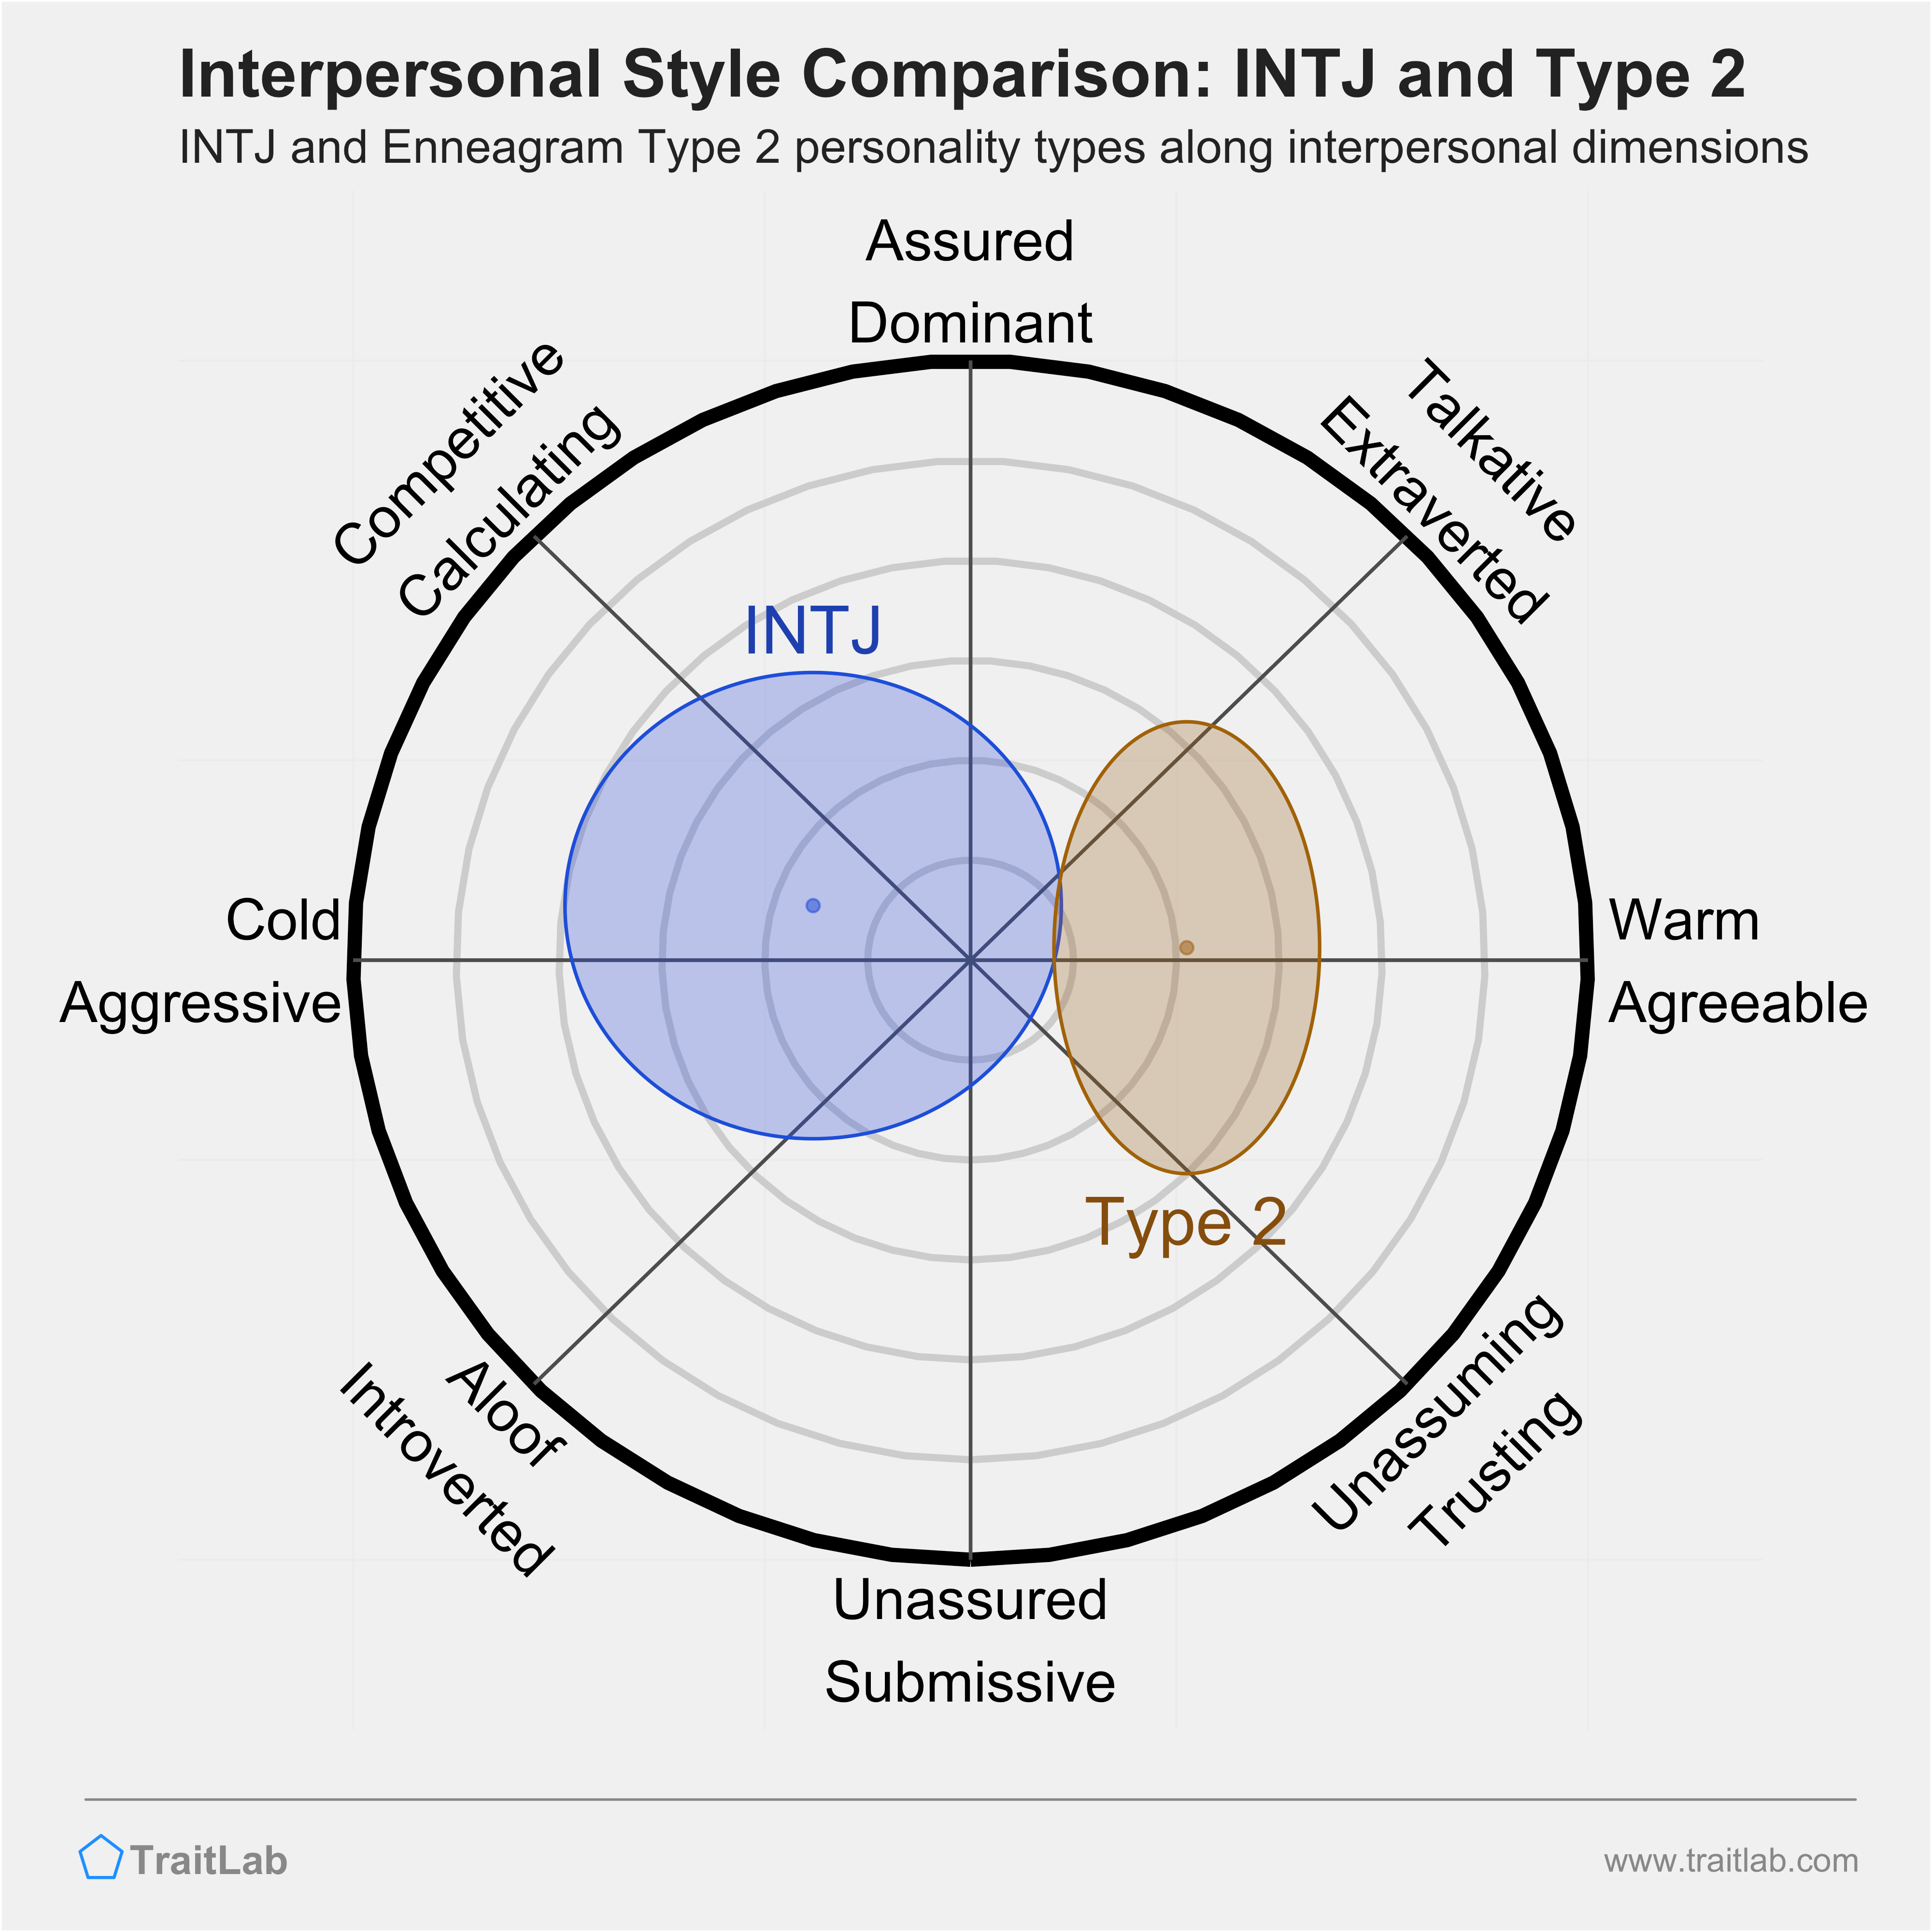 Enneagram INTJ and Type 2 comparison across interpersonal dimensions